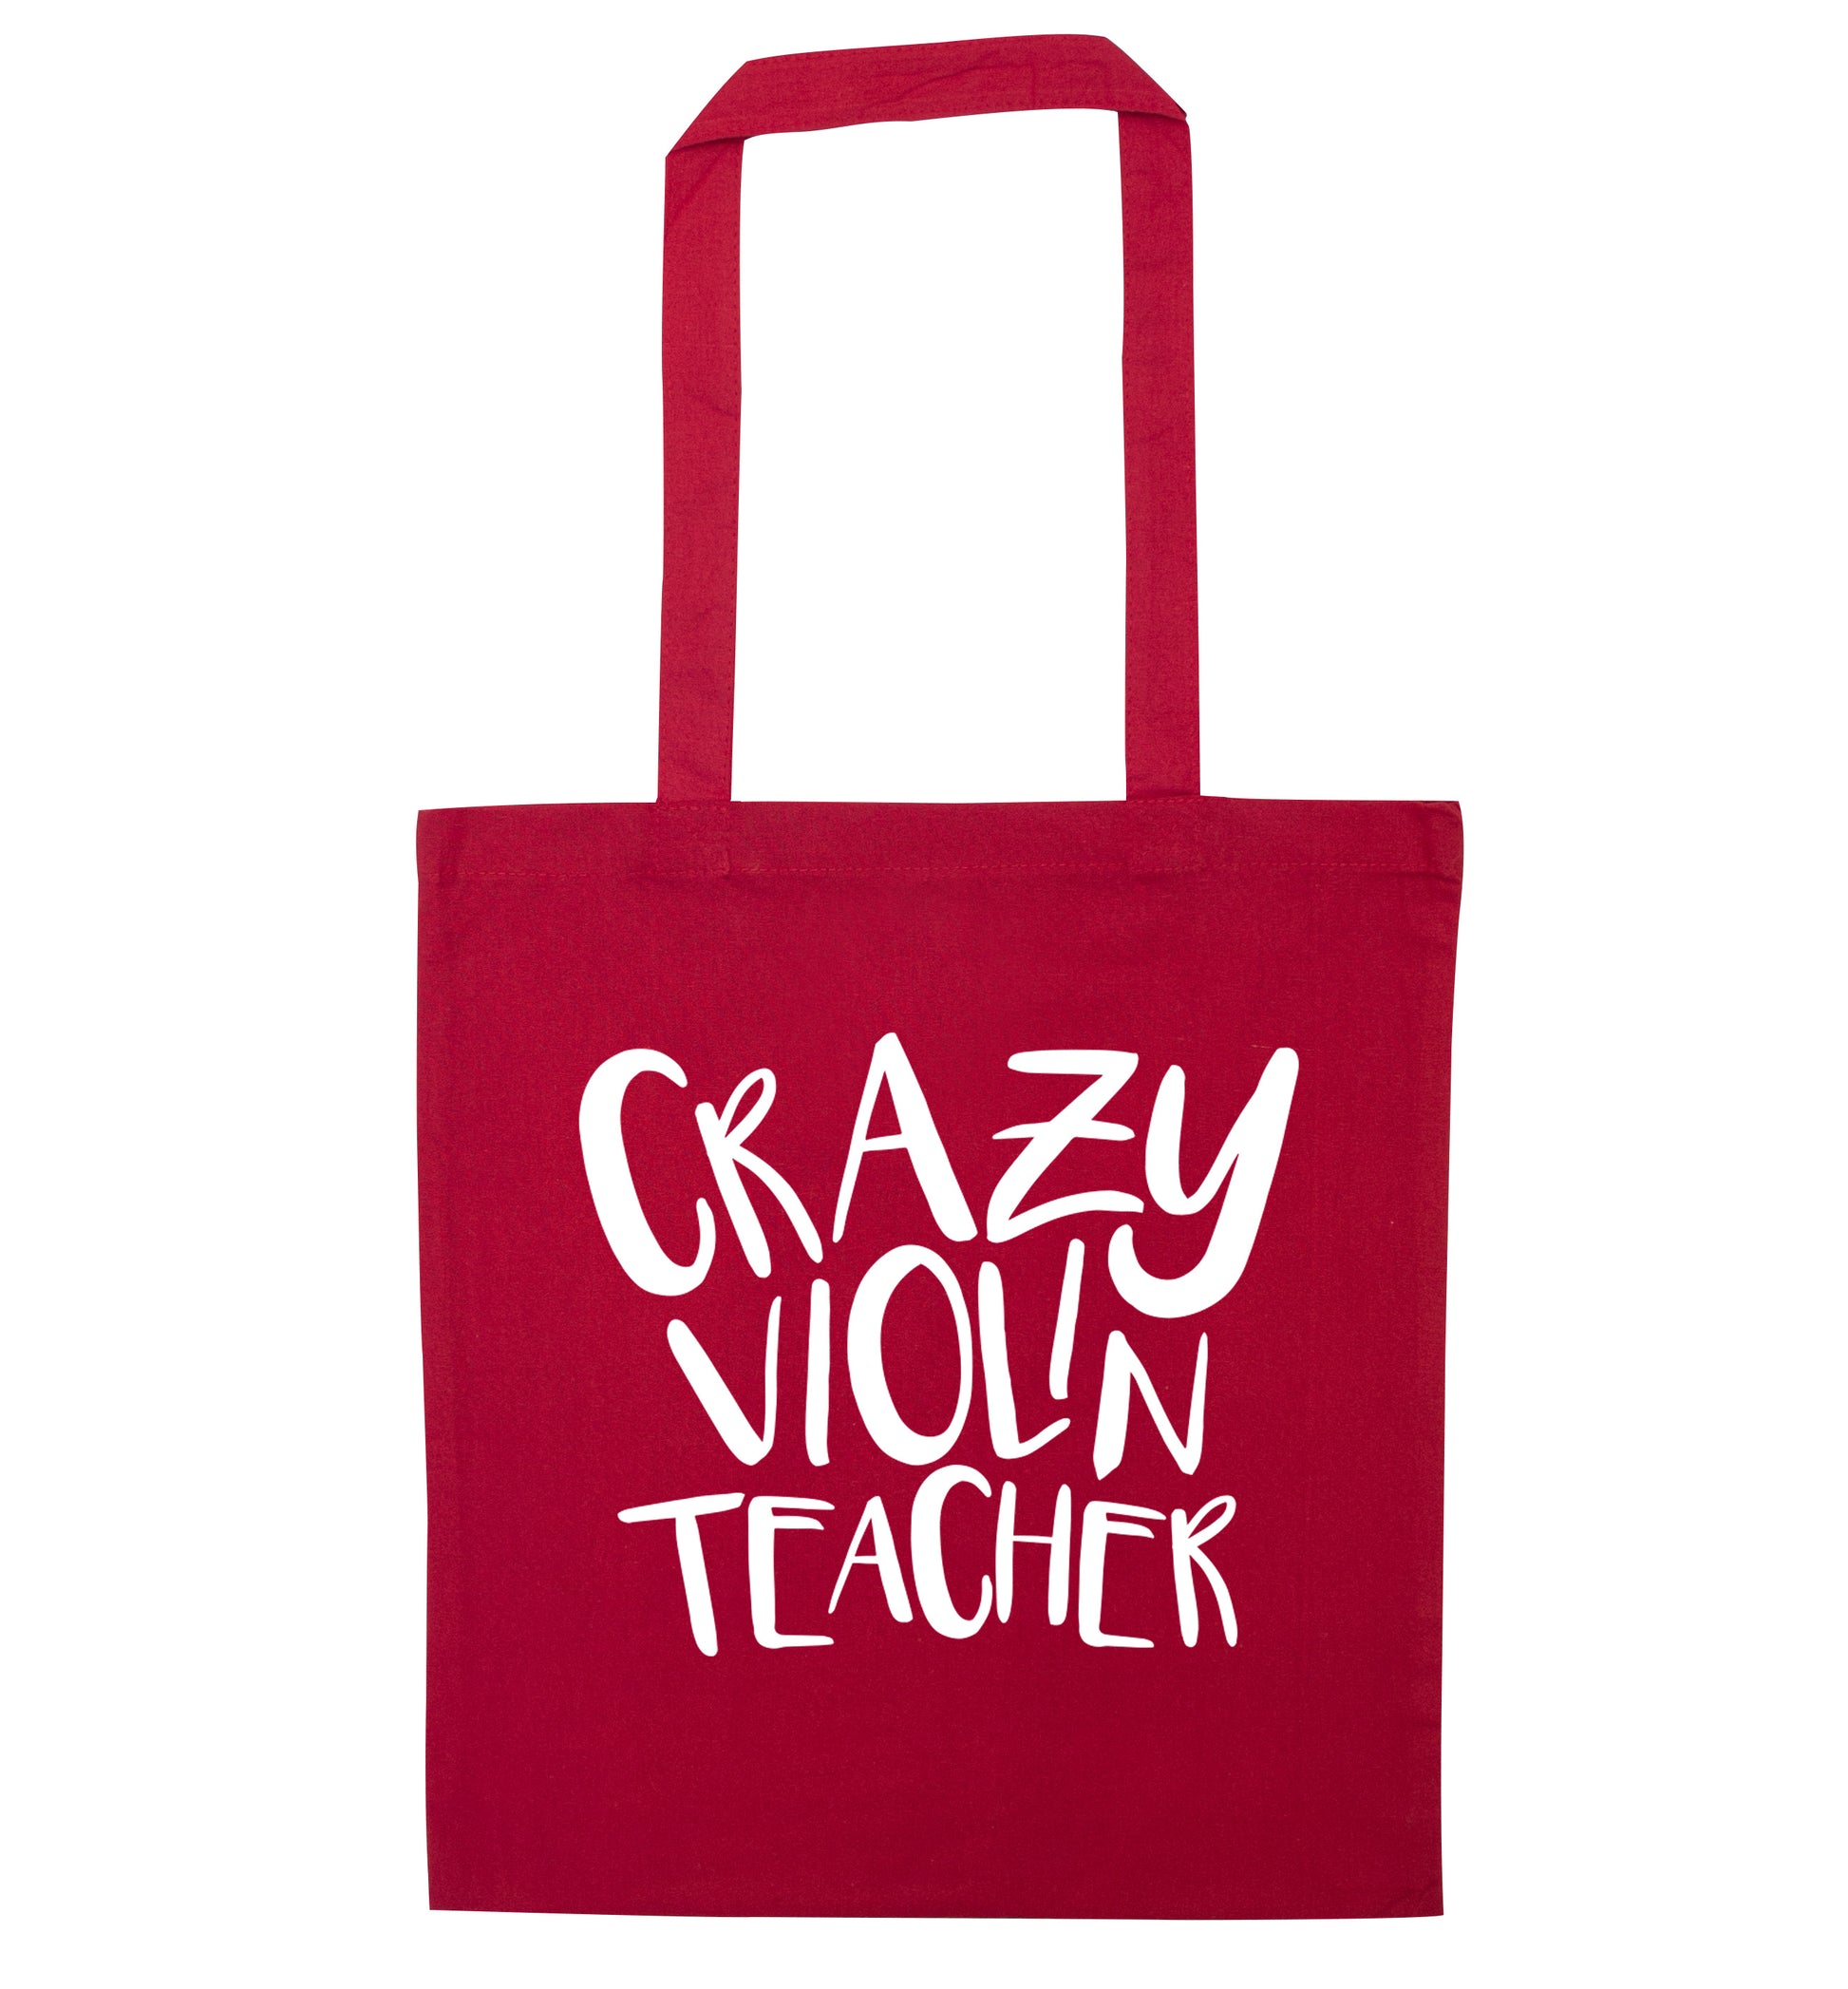 Crazy violin teacher red tote bag